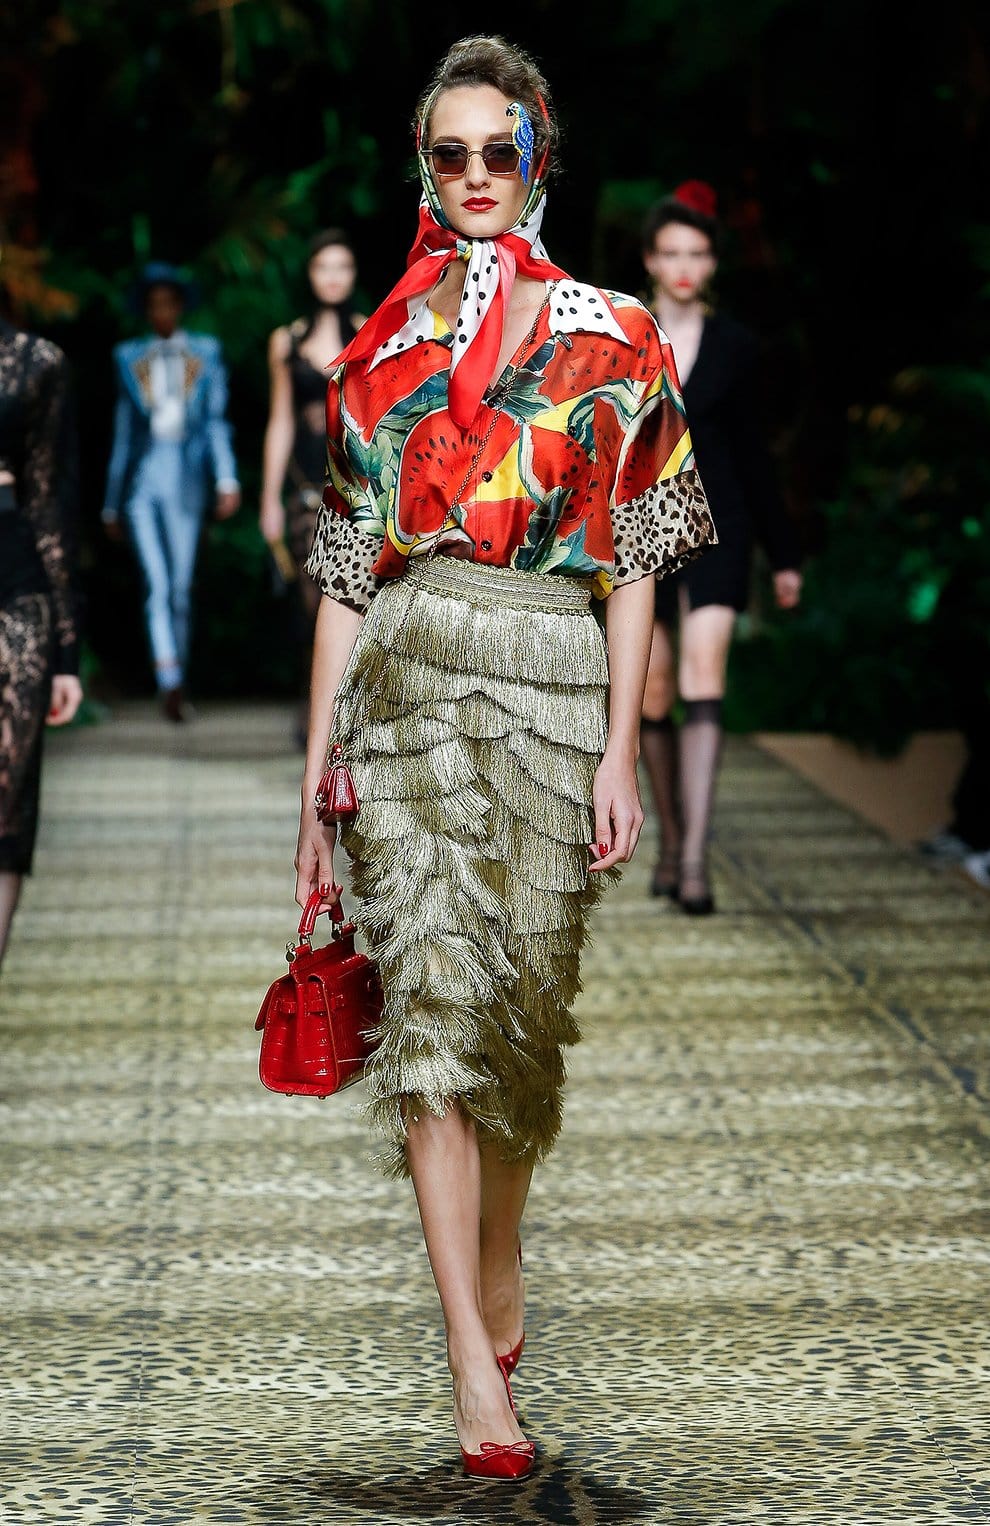 Dolce & Gabbana Tiered Metallic Fringed Skirt